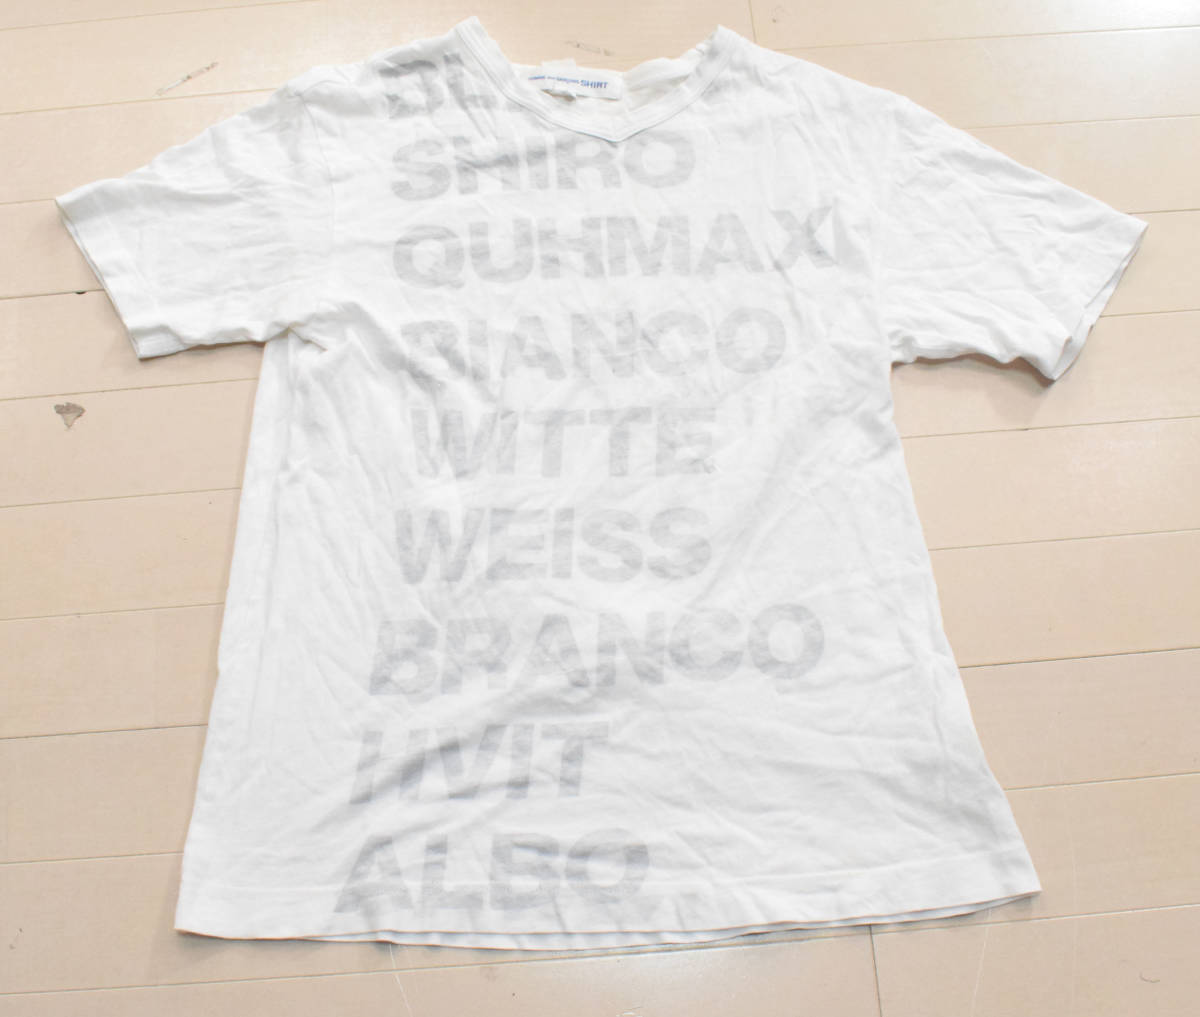 AD2011 COMME des GARCONS SHIRT ギャルソン シャツ メッセージプリント Tシャツ 白 S